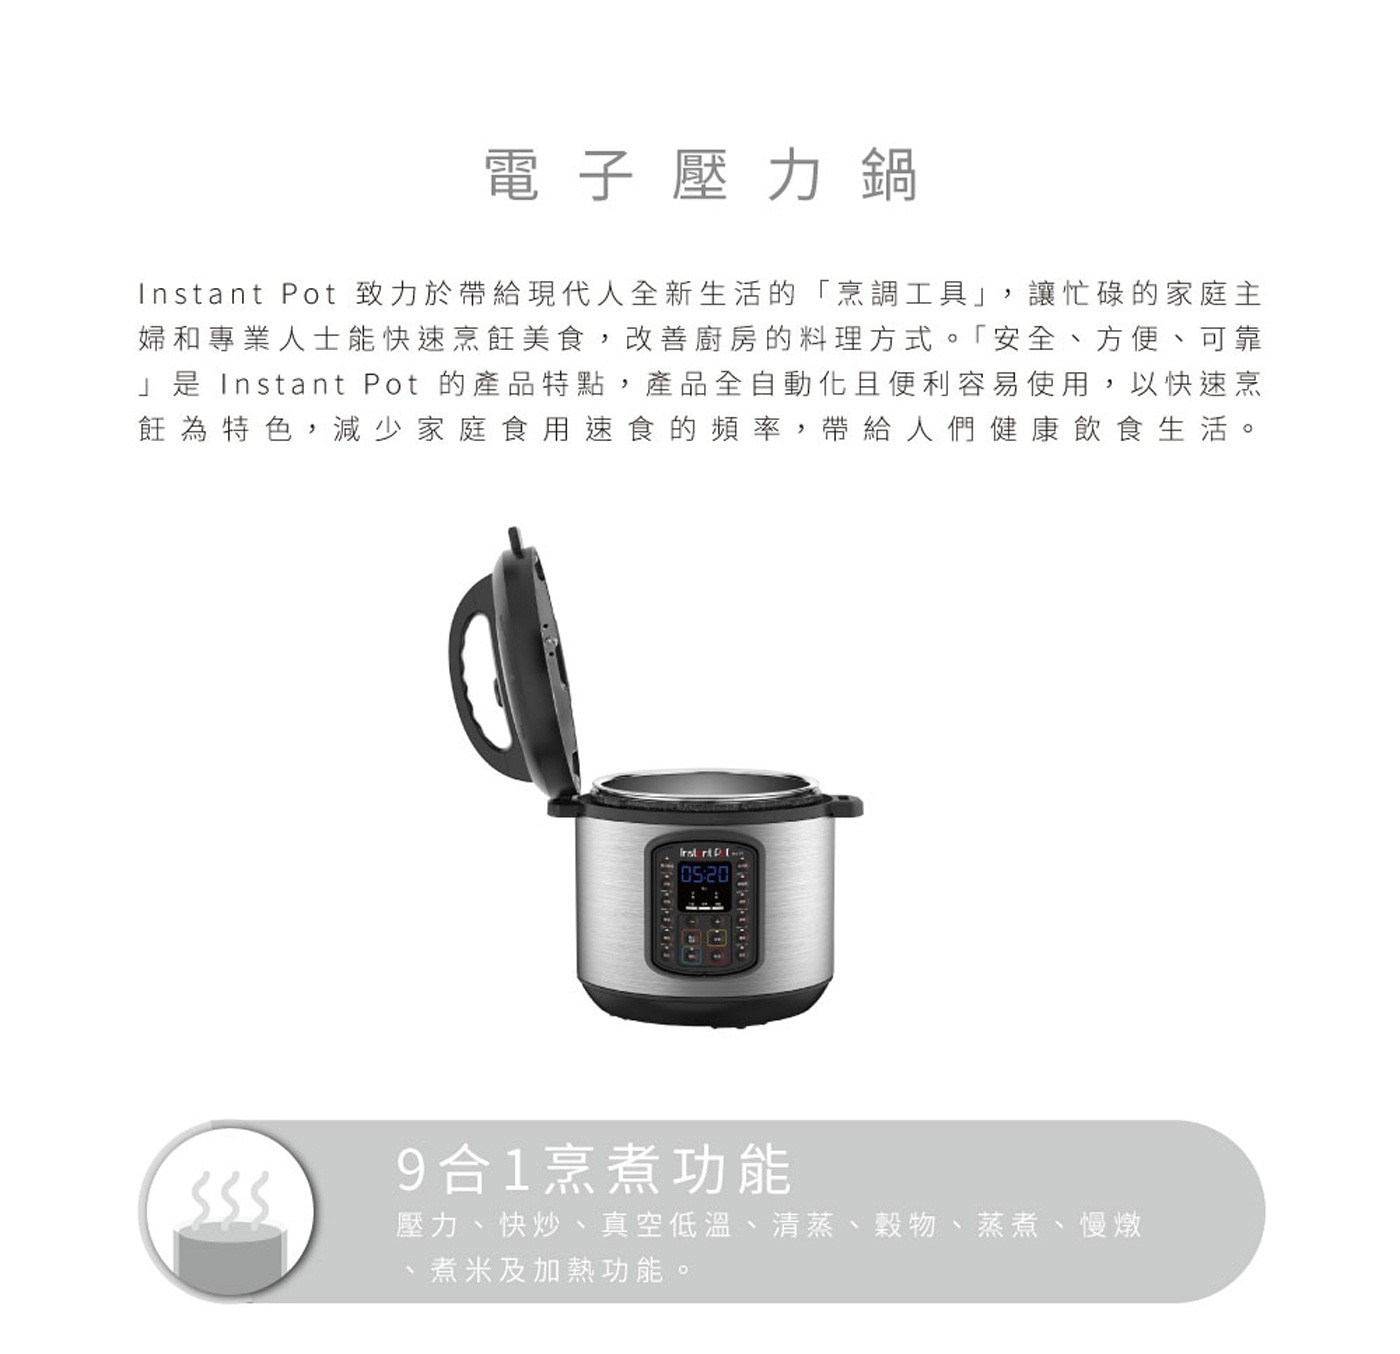 Instant Pot 電子壓力鍋 Duo SV 60 9合1烹煮功能，15種預設智能自動料理程式，10種安全機制，通過美國UL/ETL認證。